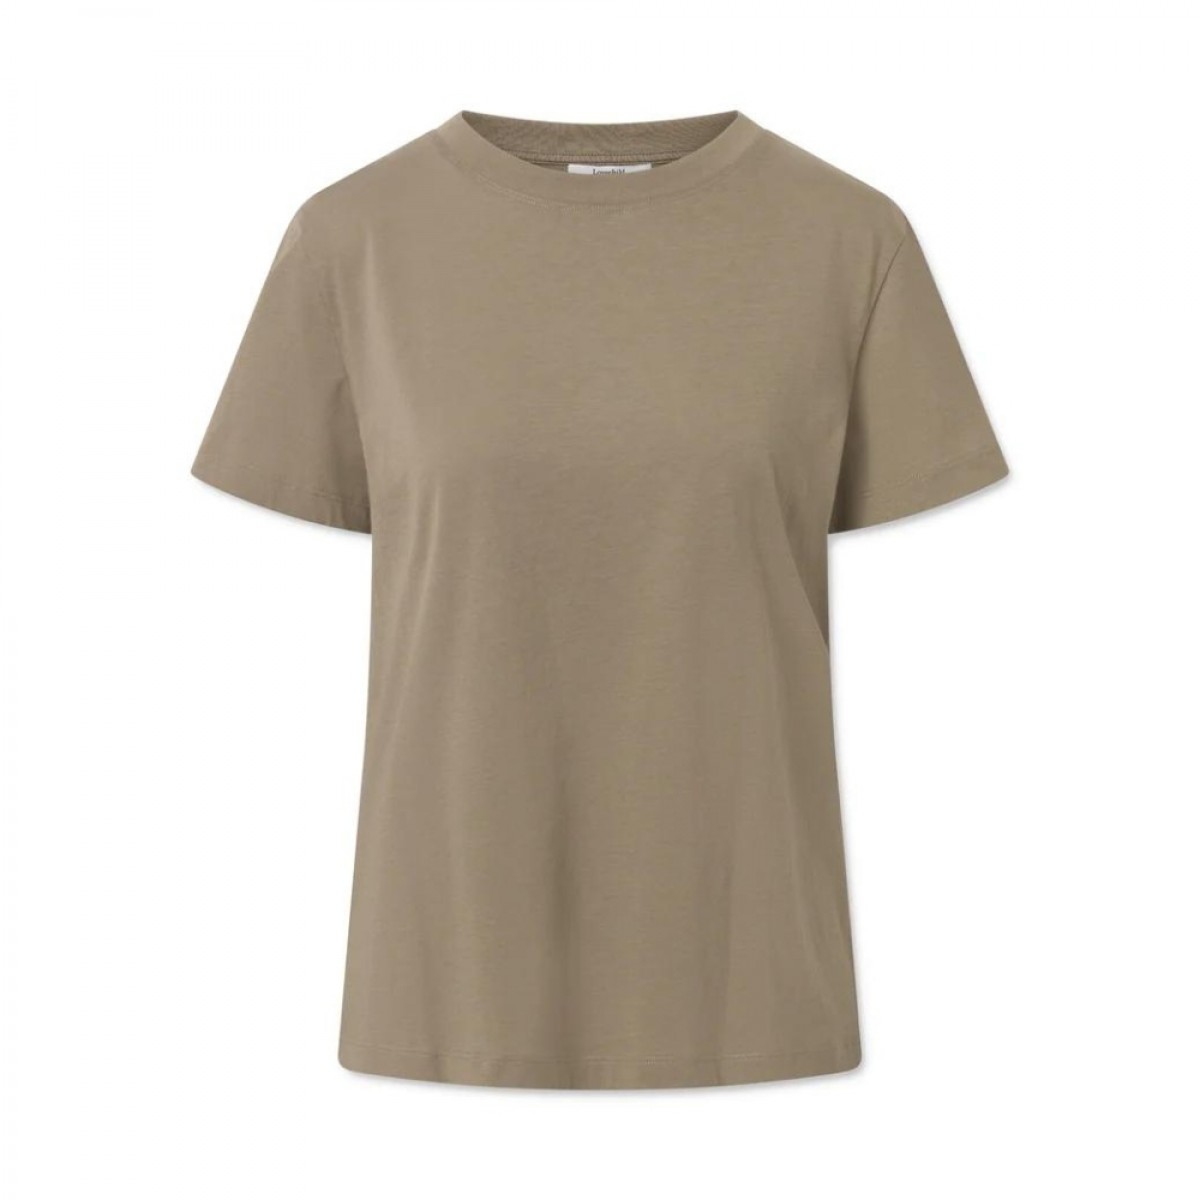 donna t-shirt - greyish brown - front